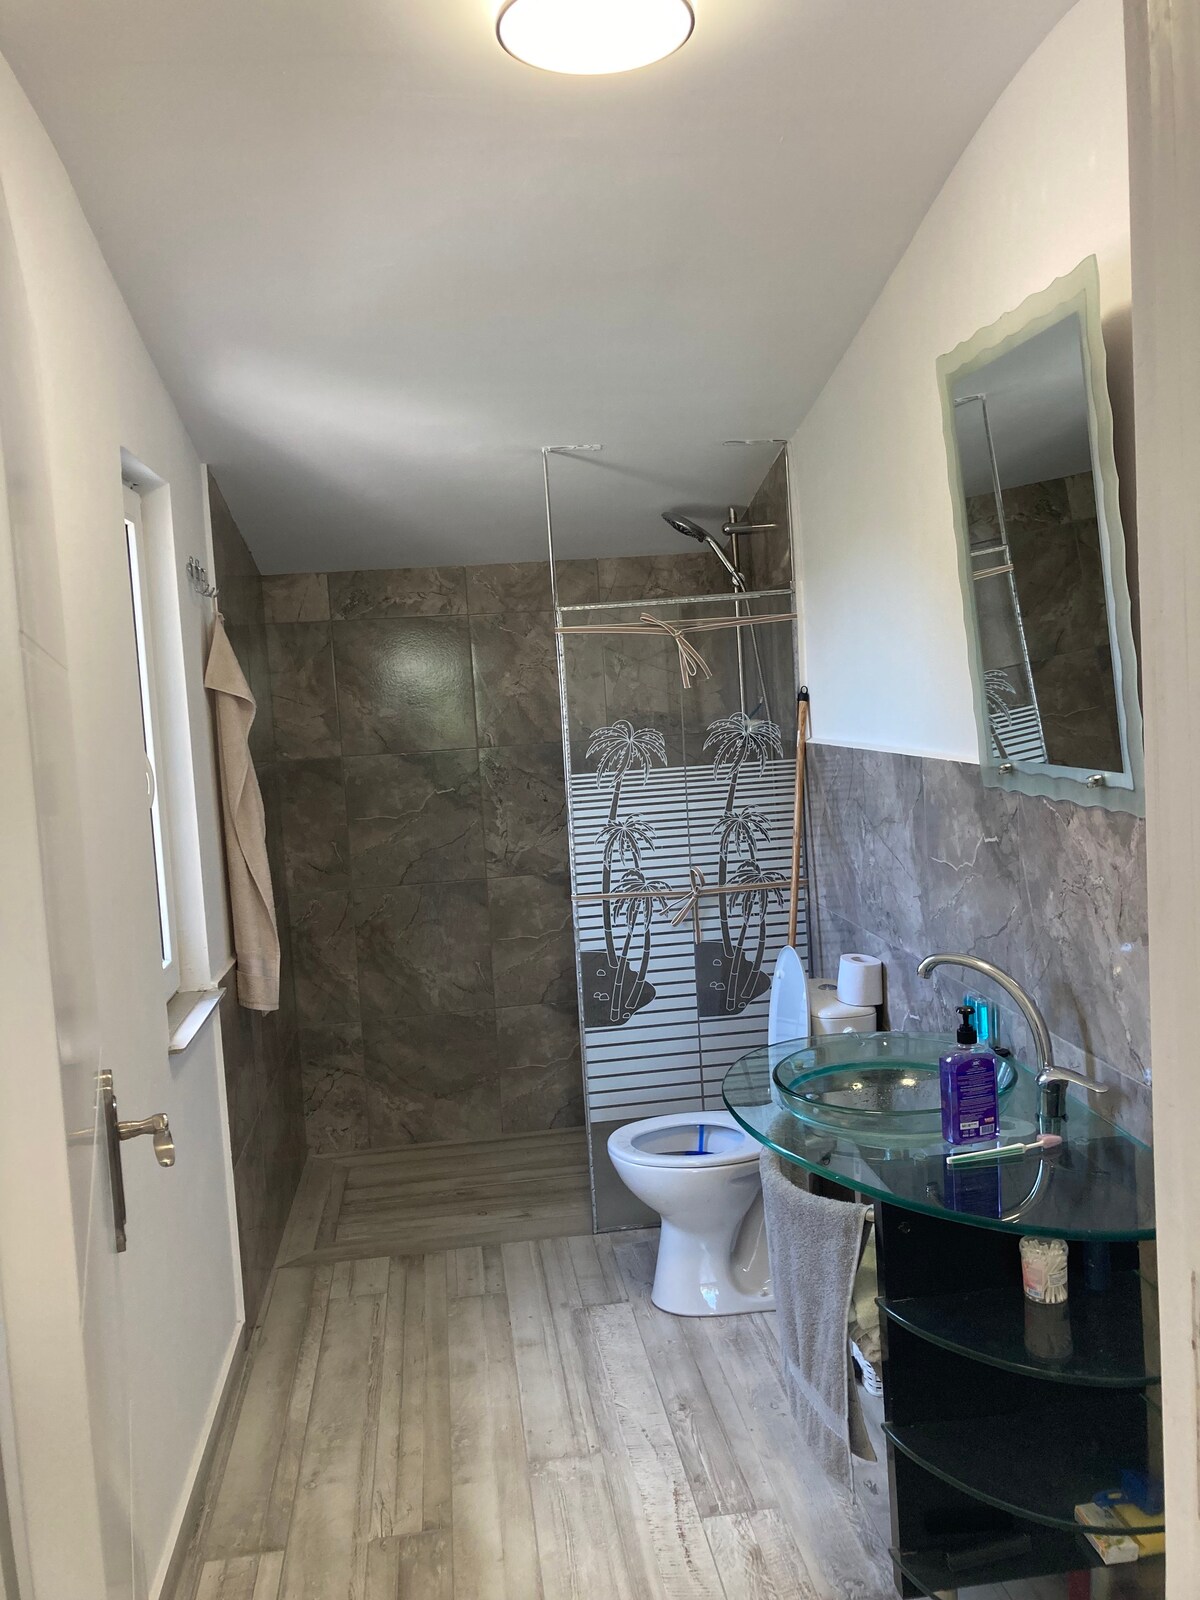 One bedroom/bathroom/patio at house in Mangalia